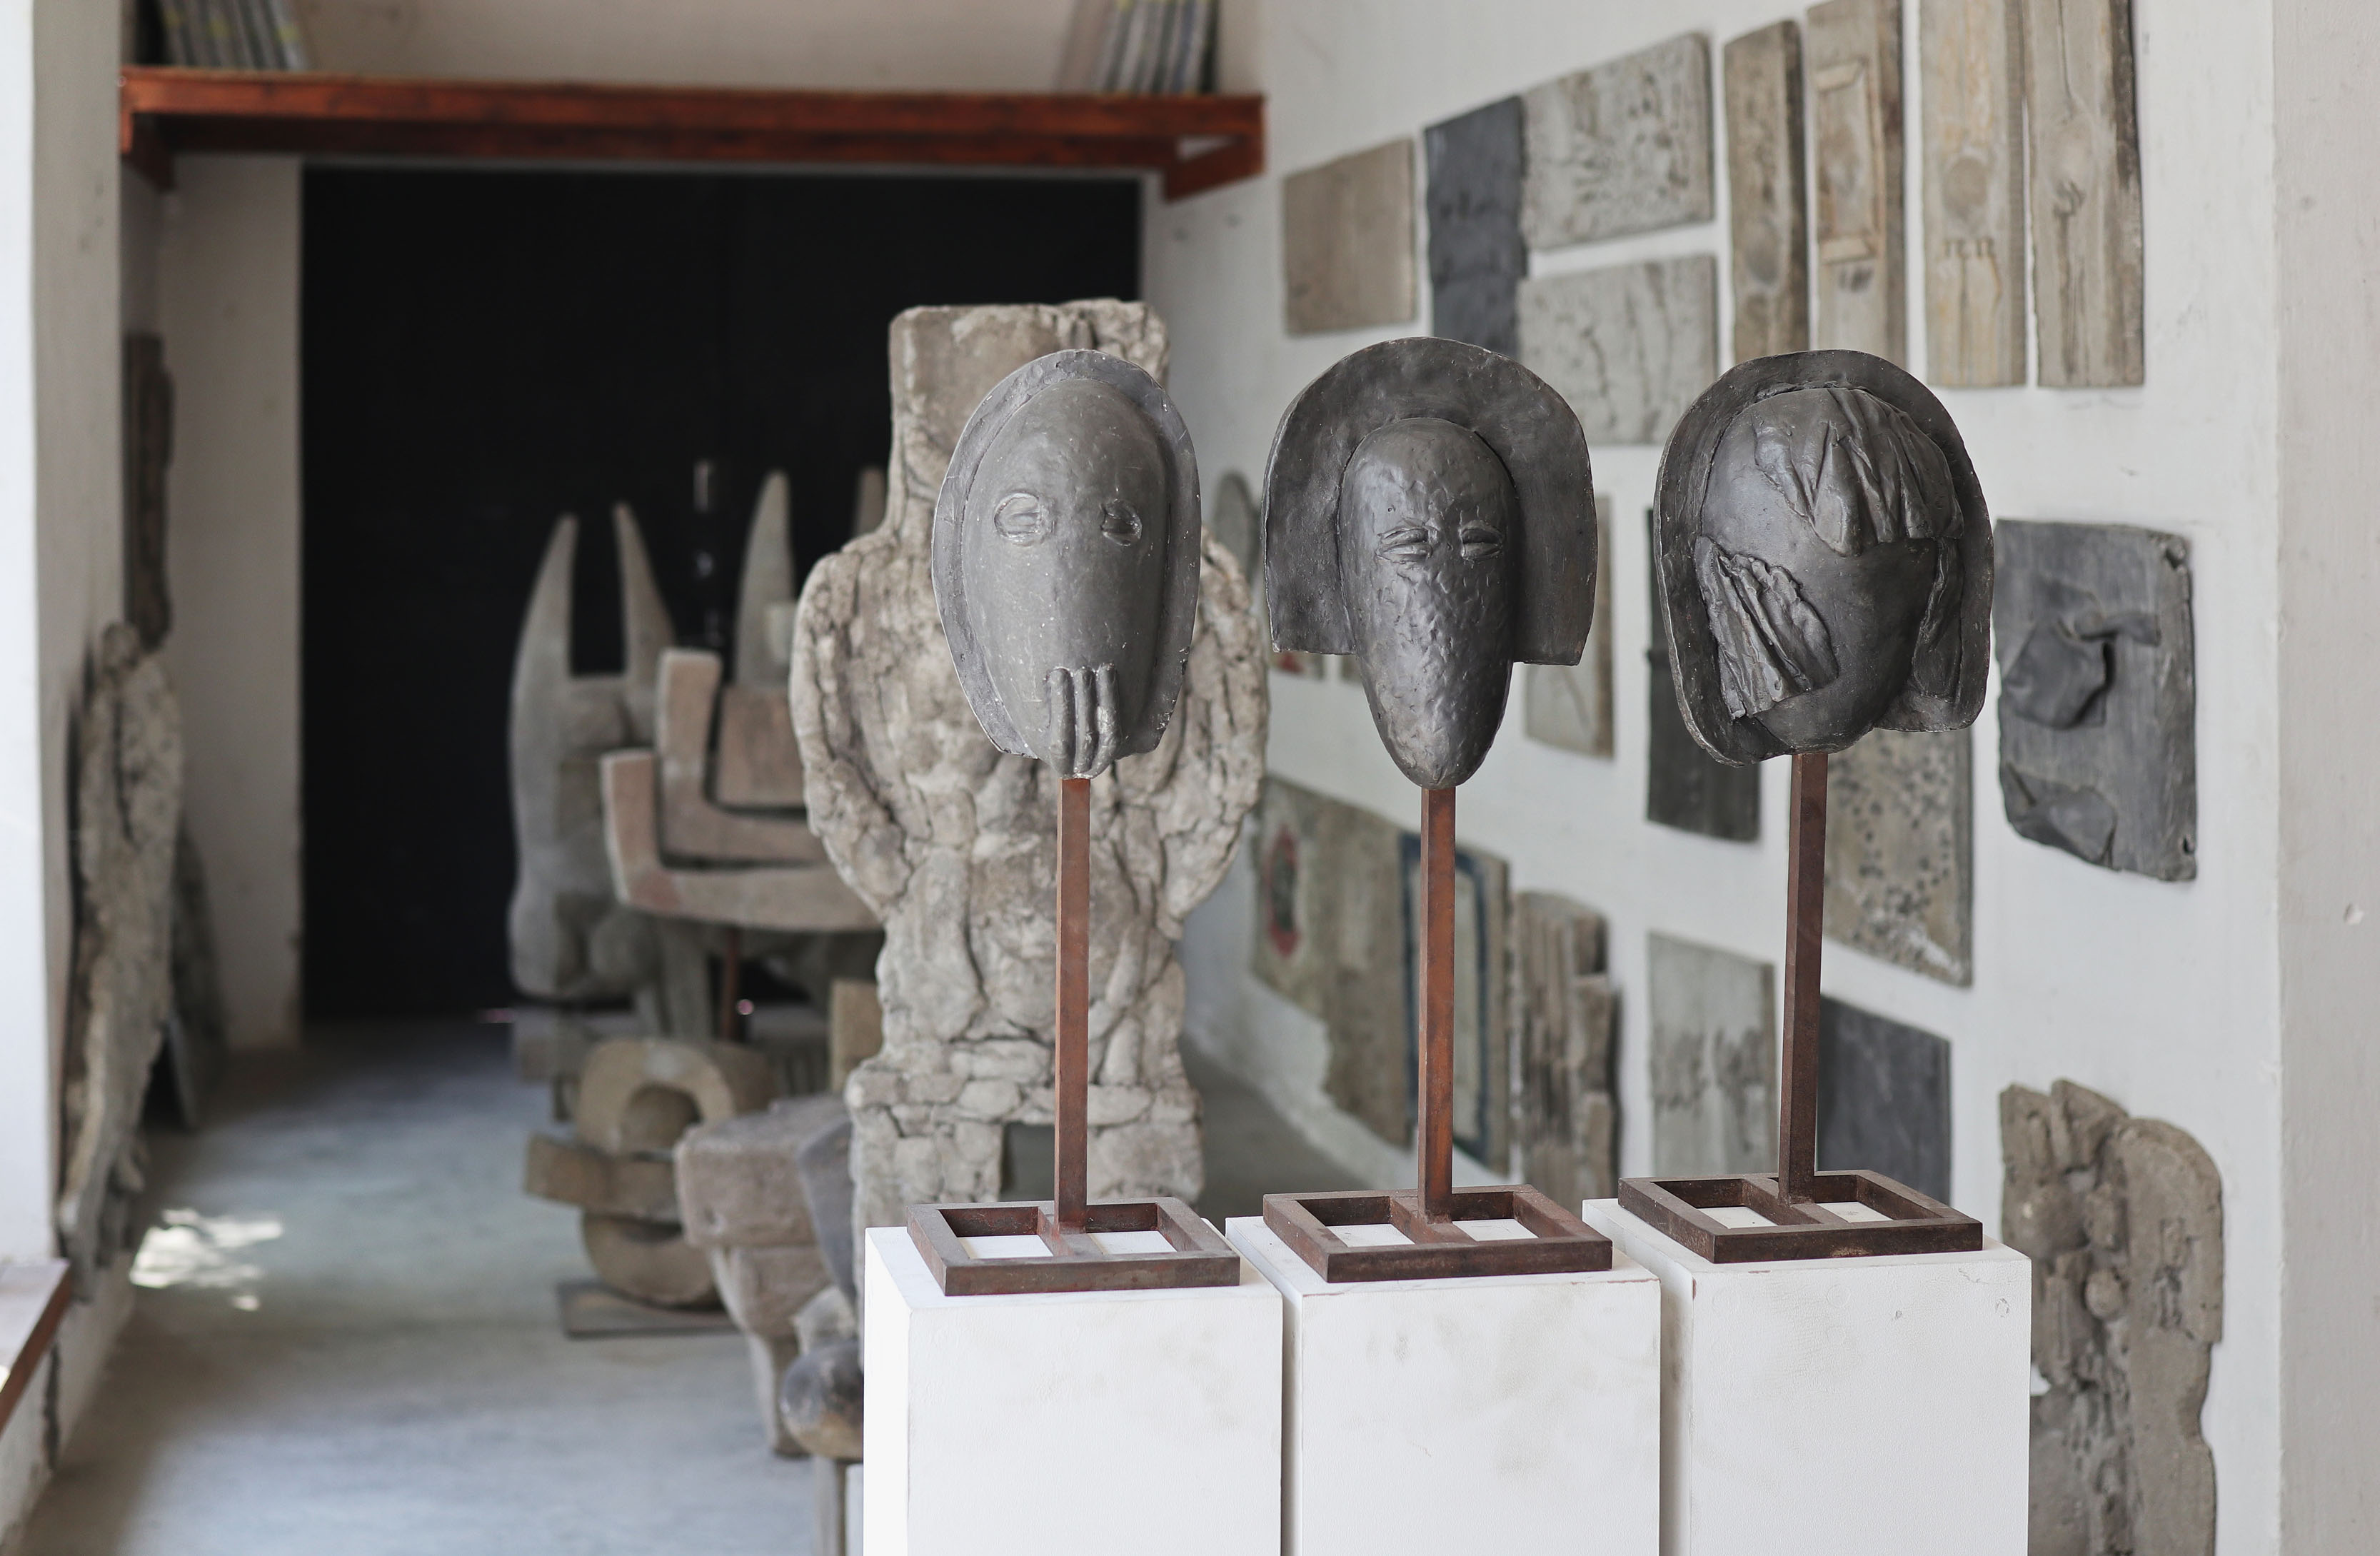 Expozice tvorby Evy Kmentové v bývalé garáži používané dříve jako sklad sochařského materiálu